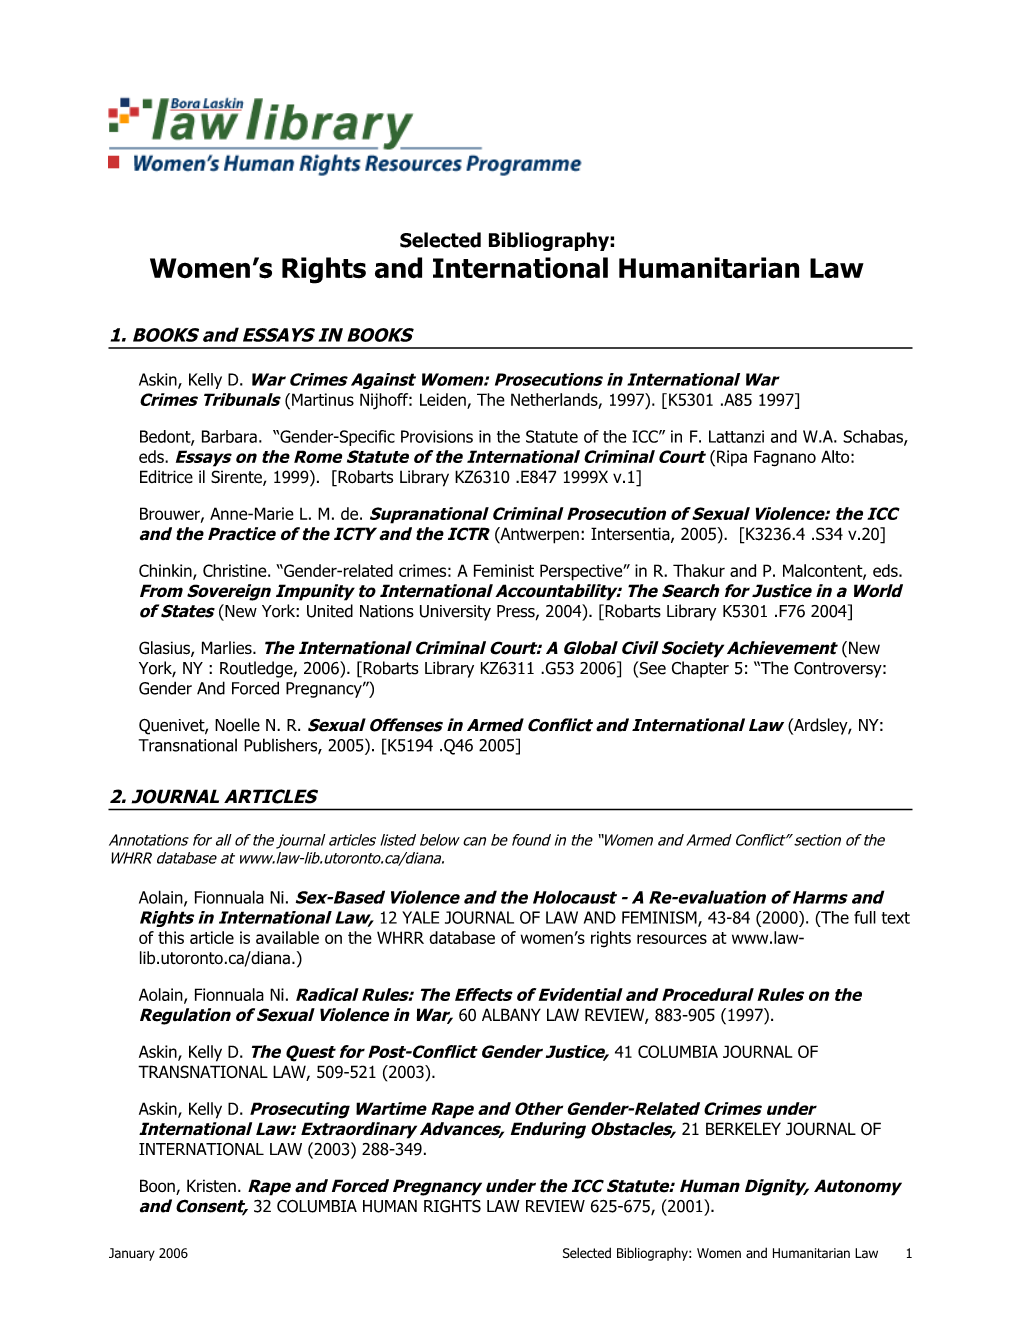 Bibliography Women and Humanitarian Law